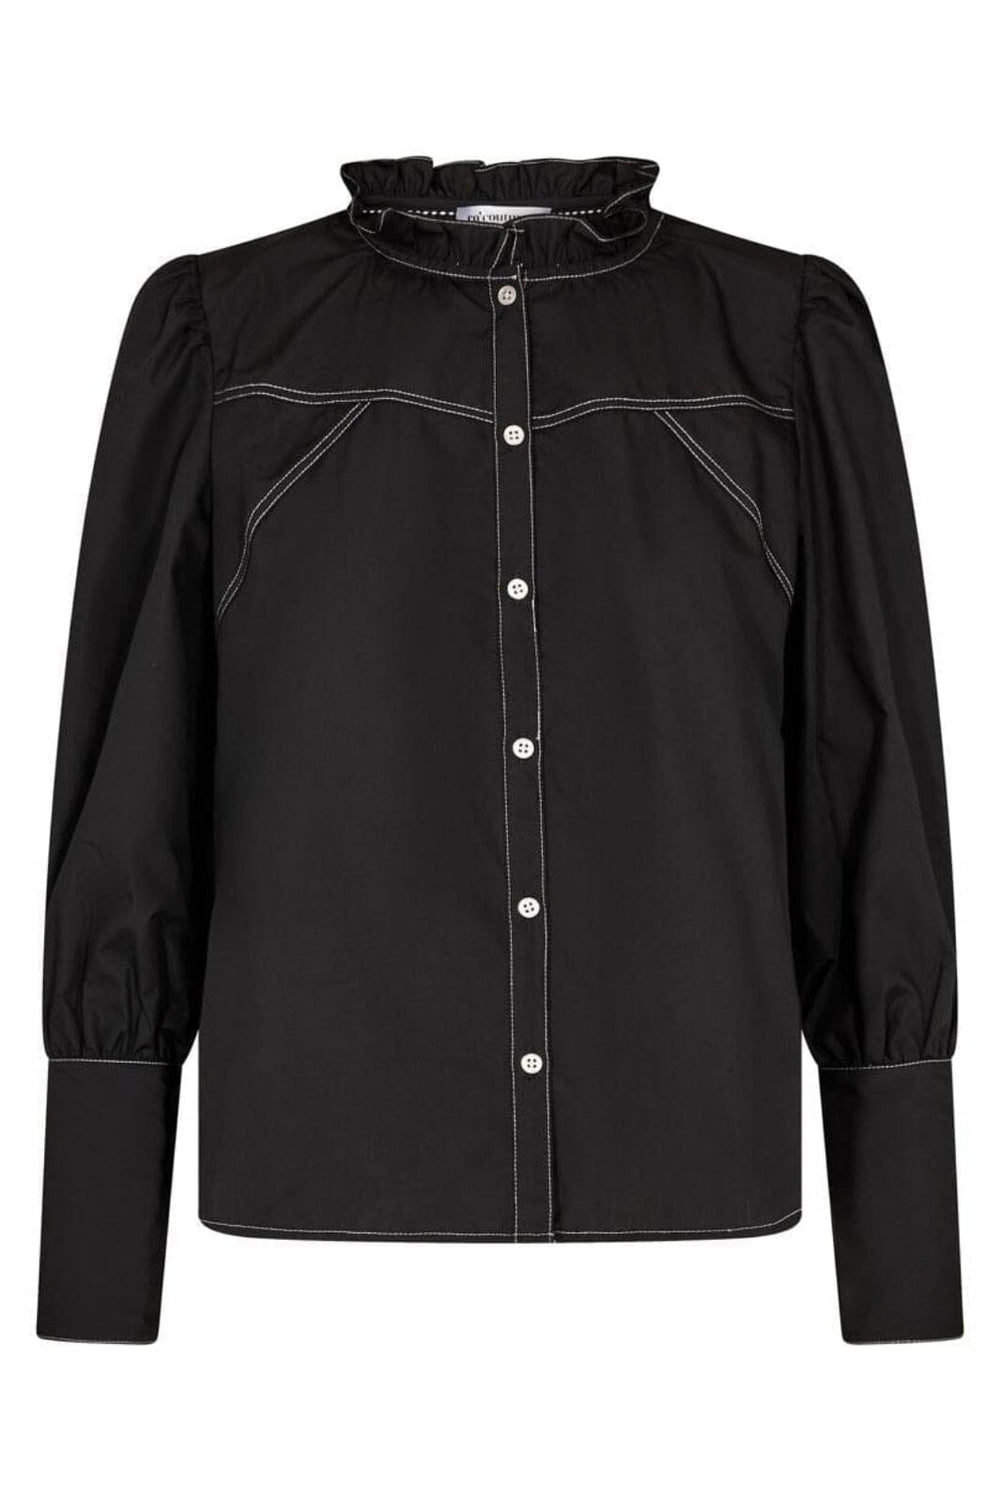 Co´couture - Bonniecc Stitch Shirt - 96 Black Skjorter 